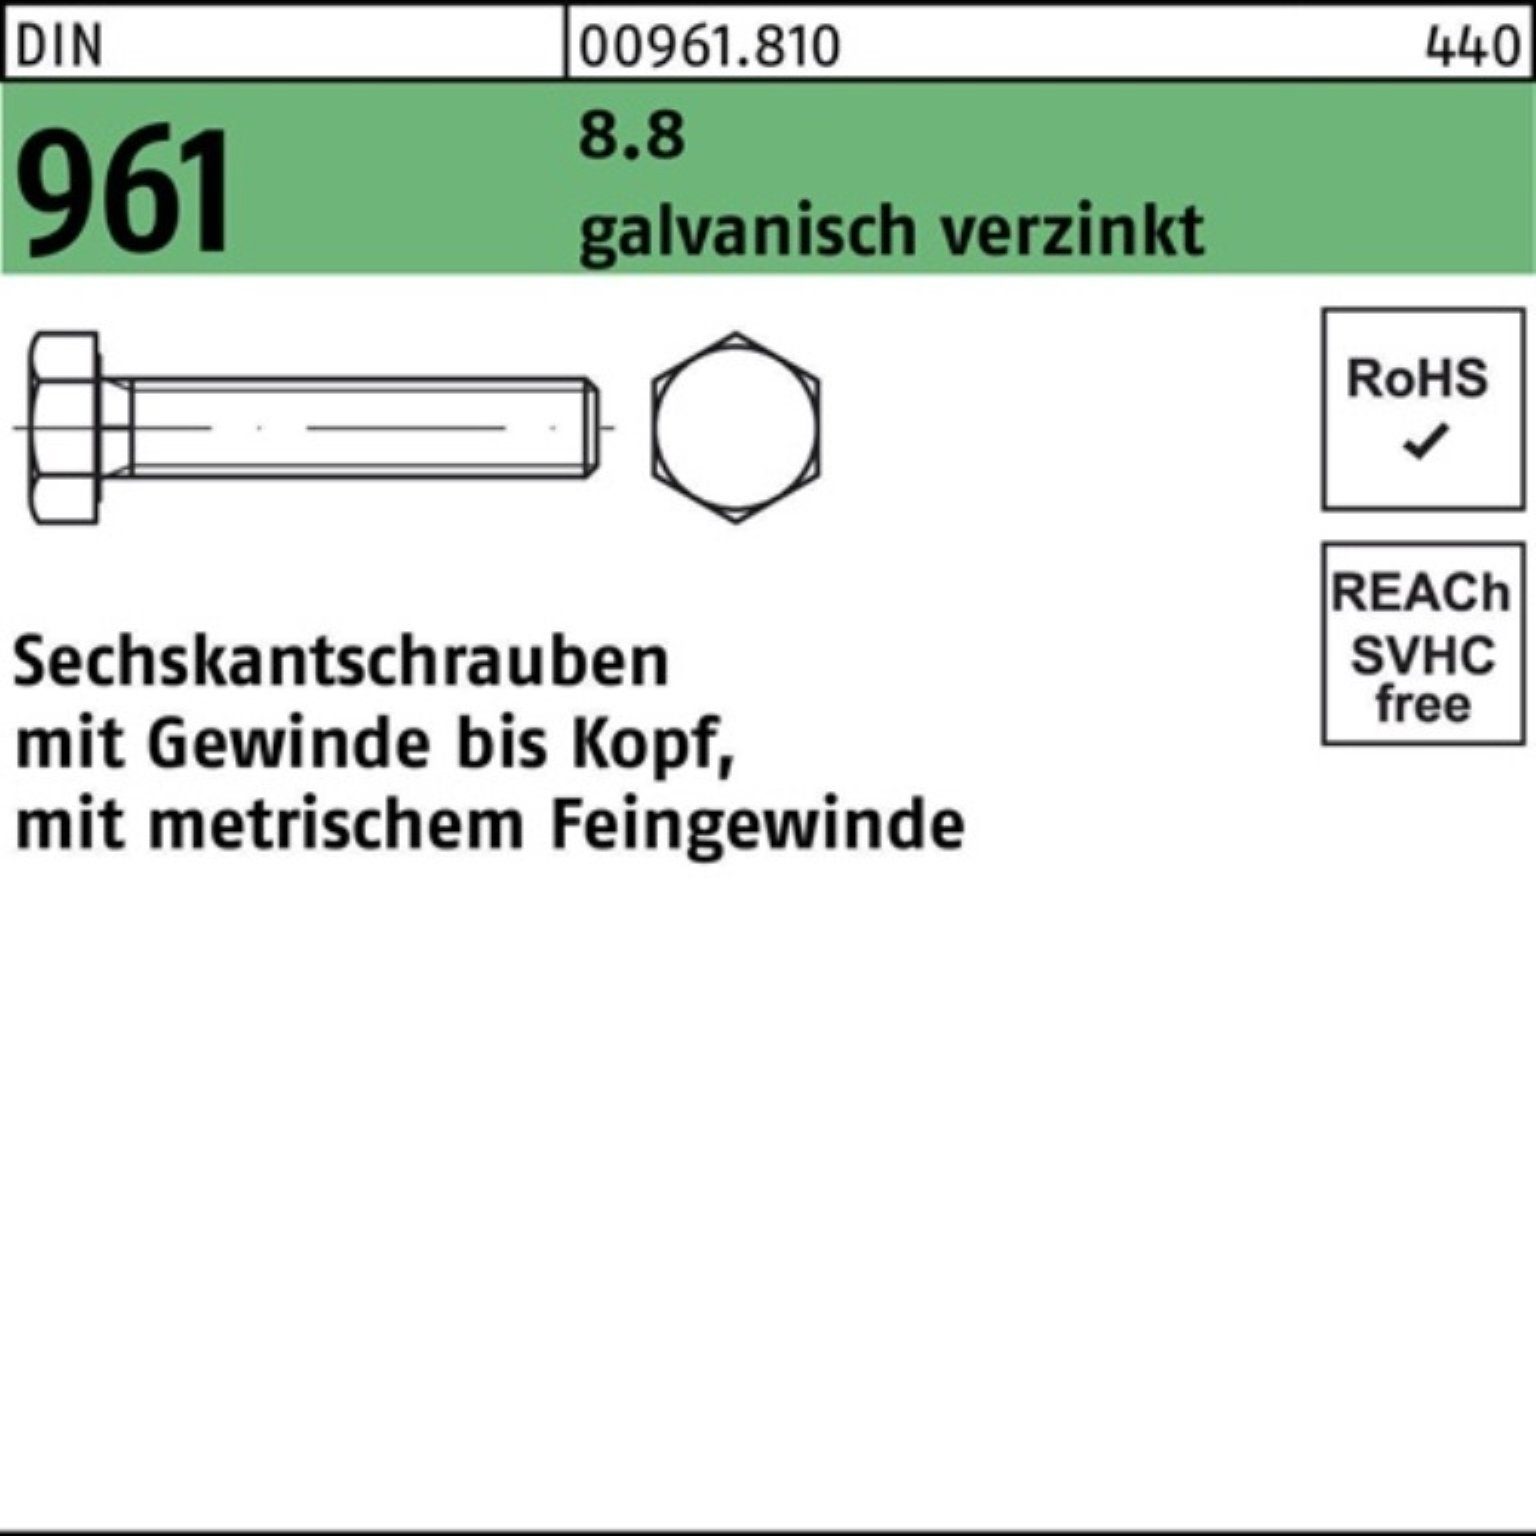 Reyher Sechskantschraube 961 DIN M14x1,5x 100er Pack Sechskantschraube VG 50 70 galv.verz. 8.8